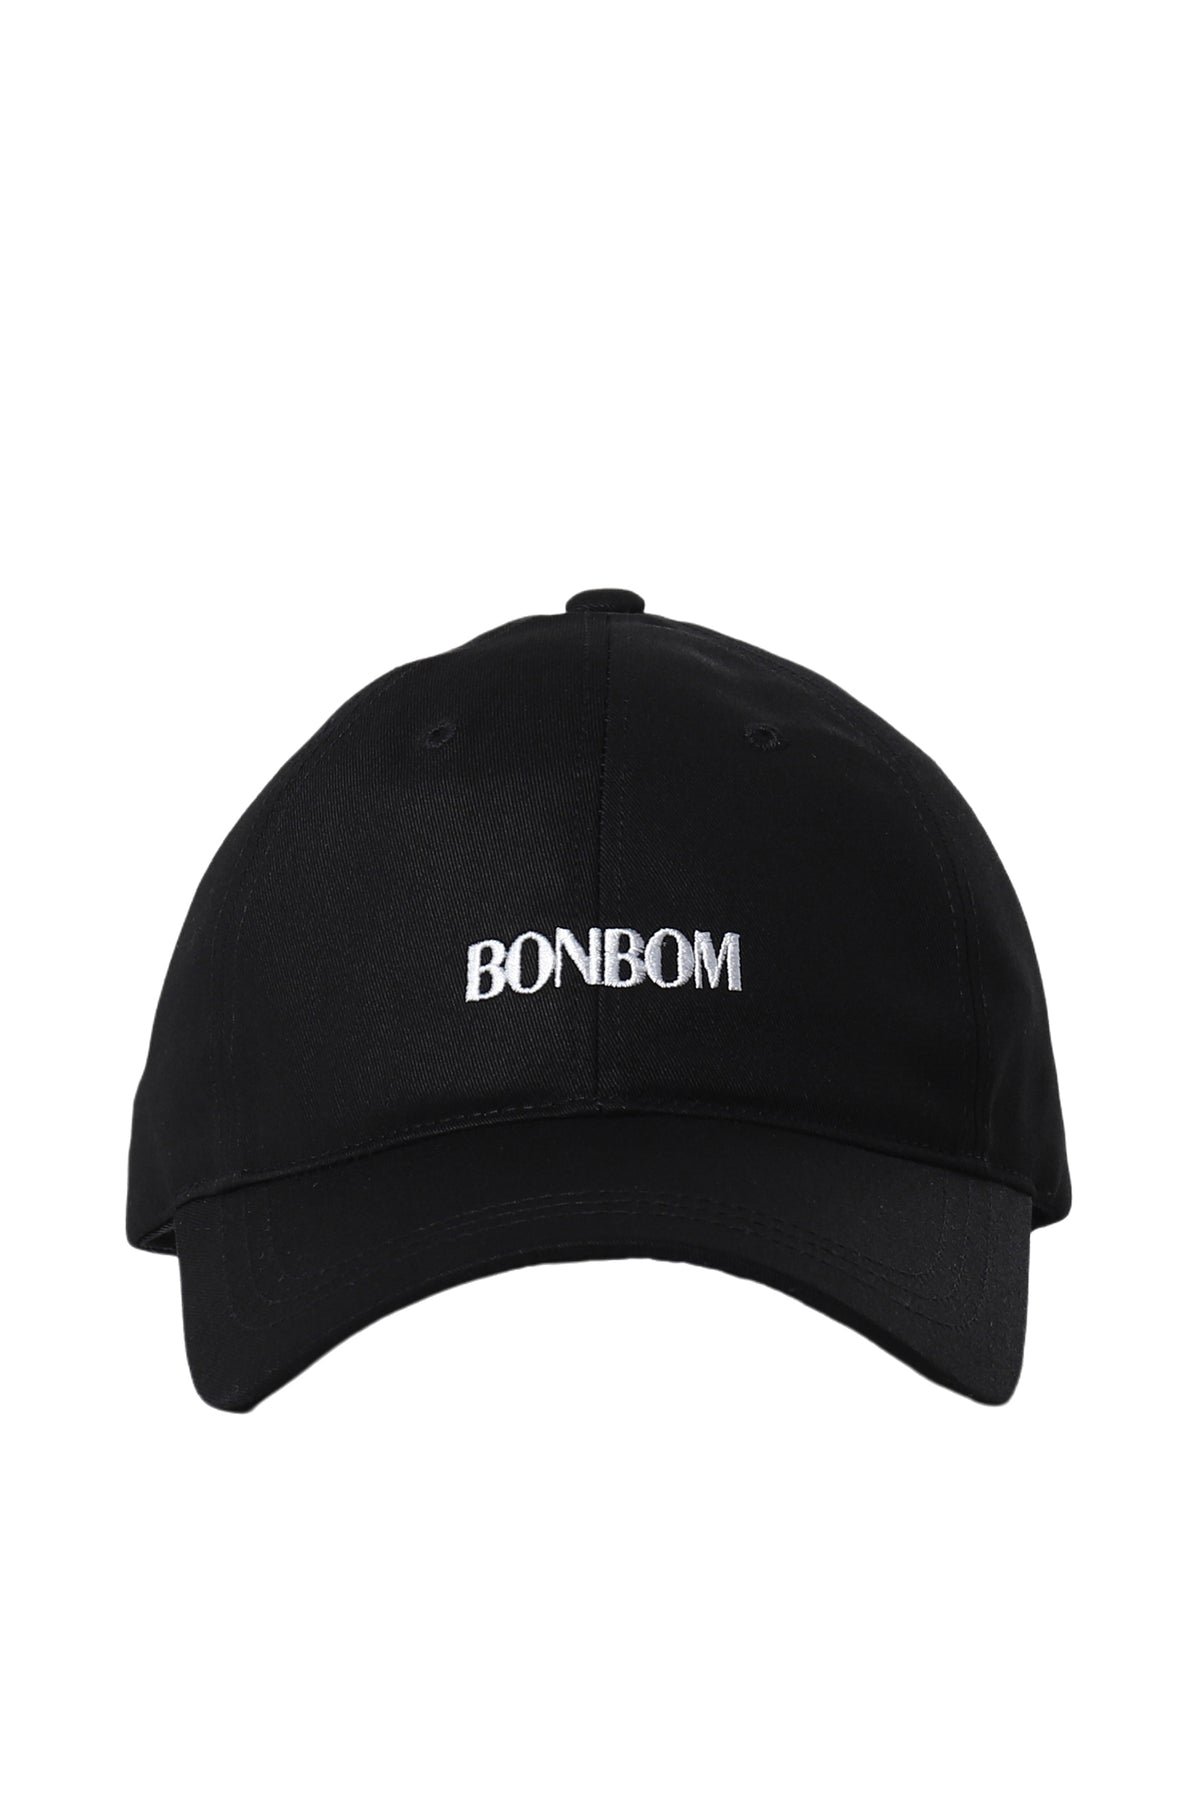 BONBOM LOGO CAP / BLK